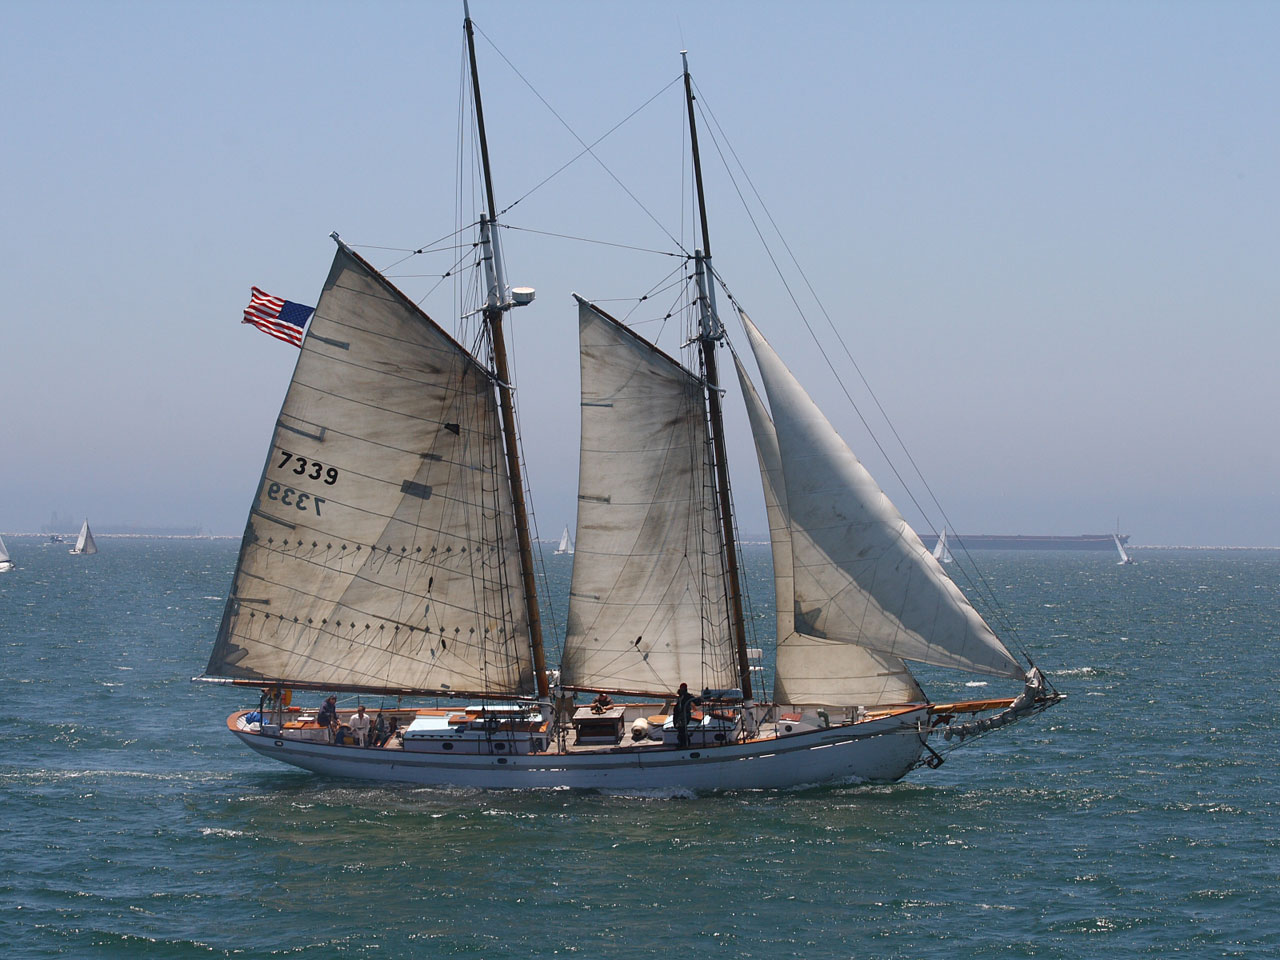 Two-masted Schooner